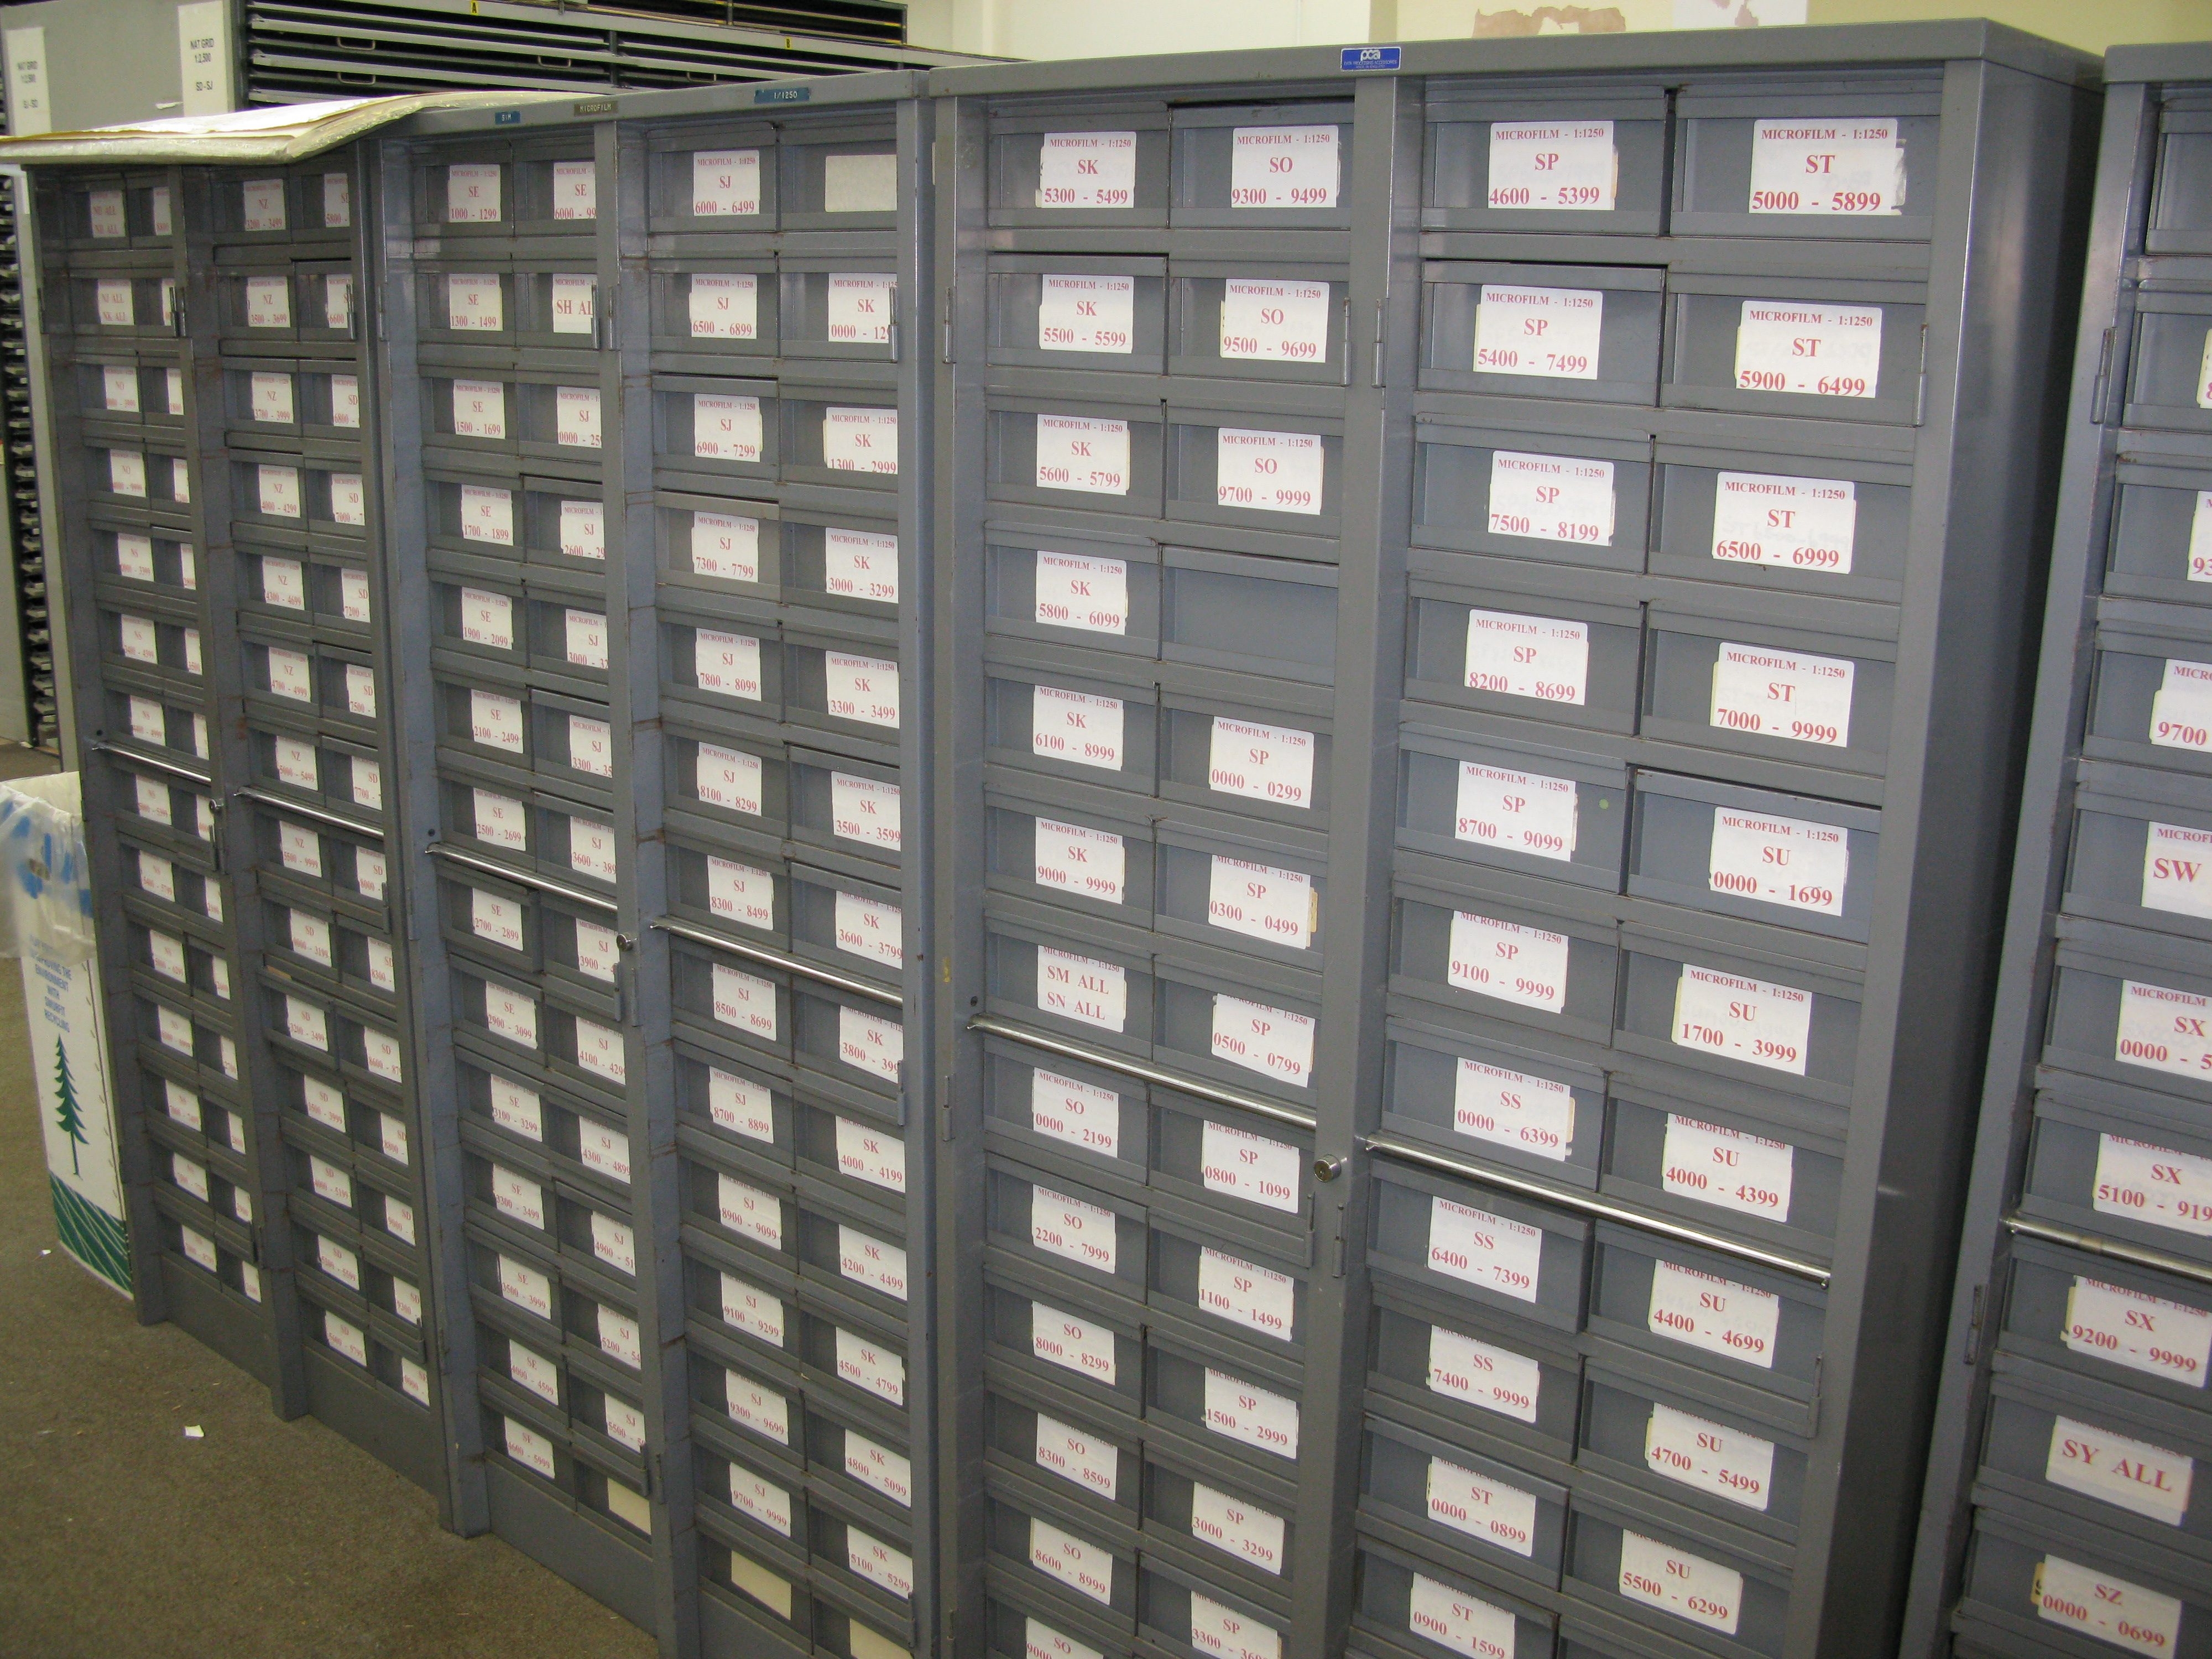 W415 HMA - microfilm drawers